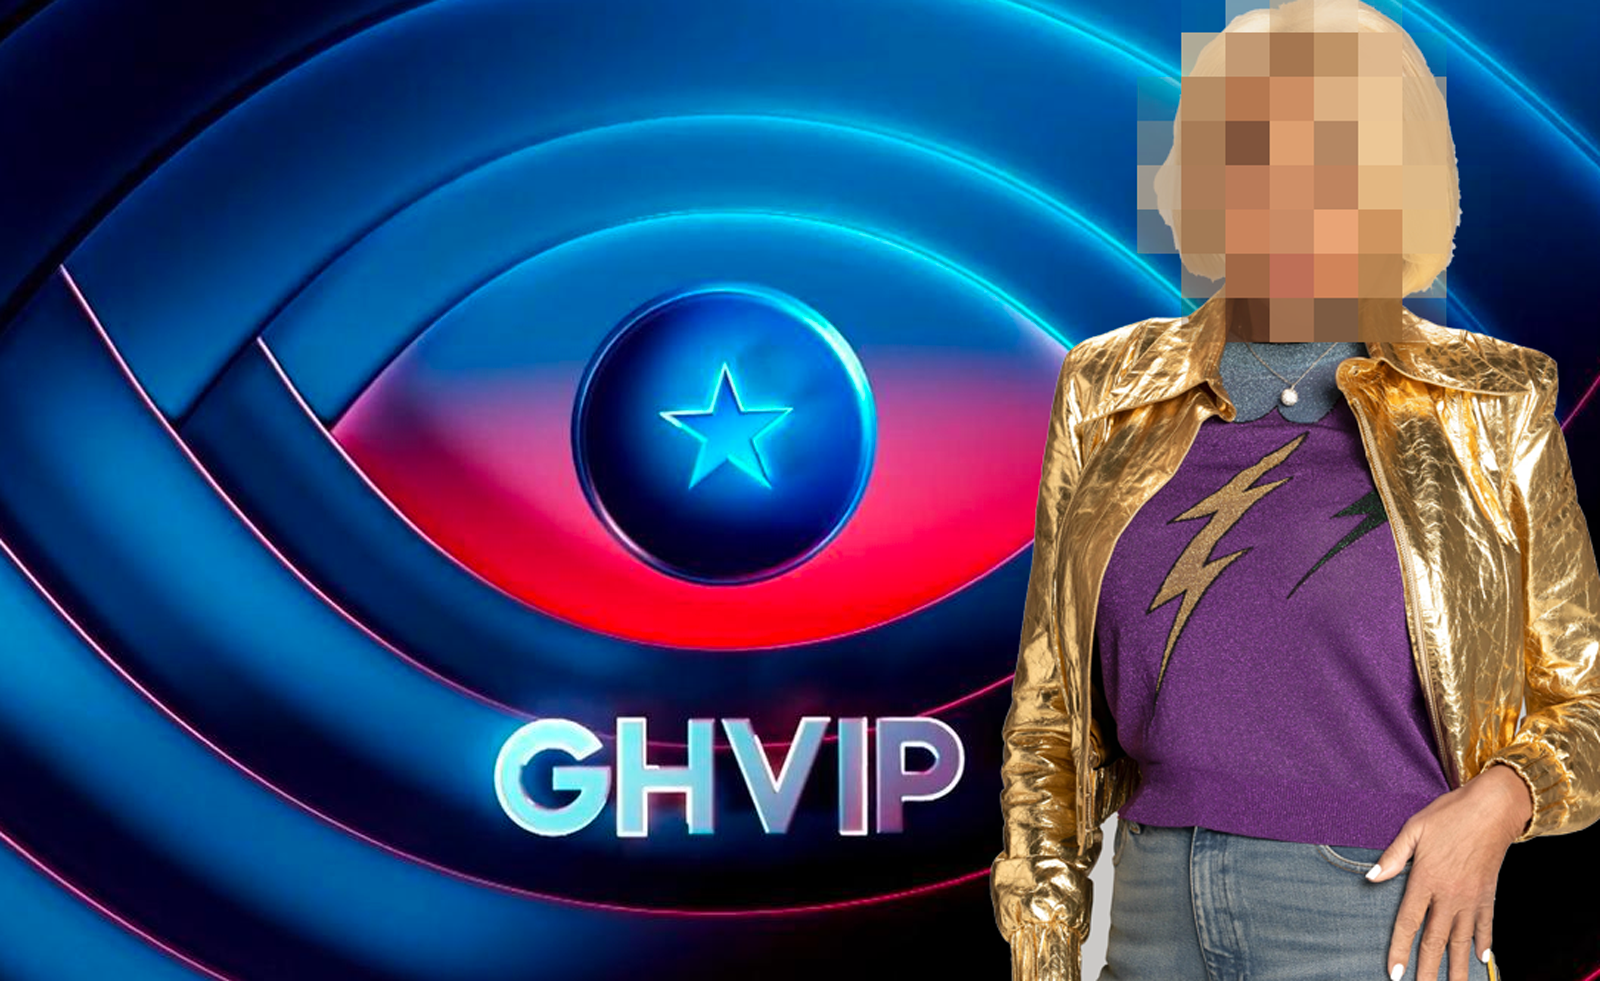 Laura Bozzo primera concursante confirmada para GH VIP